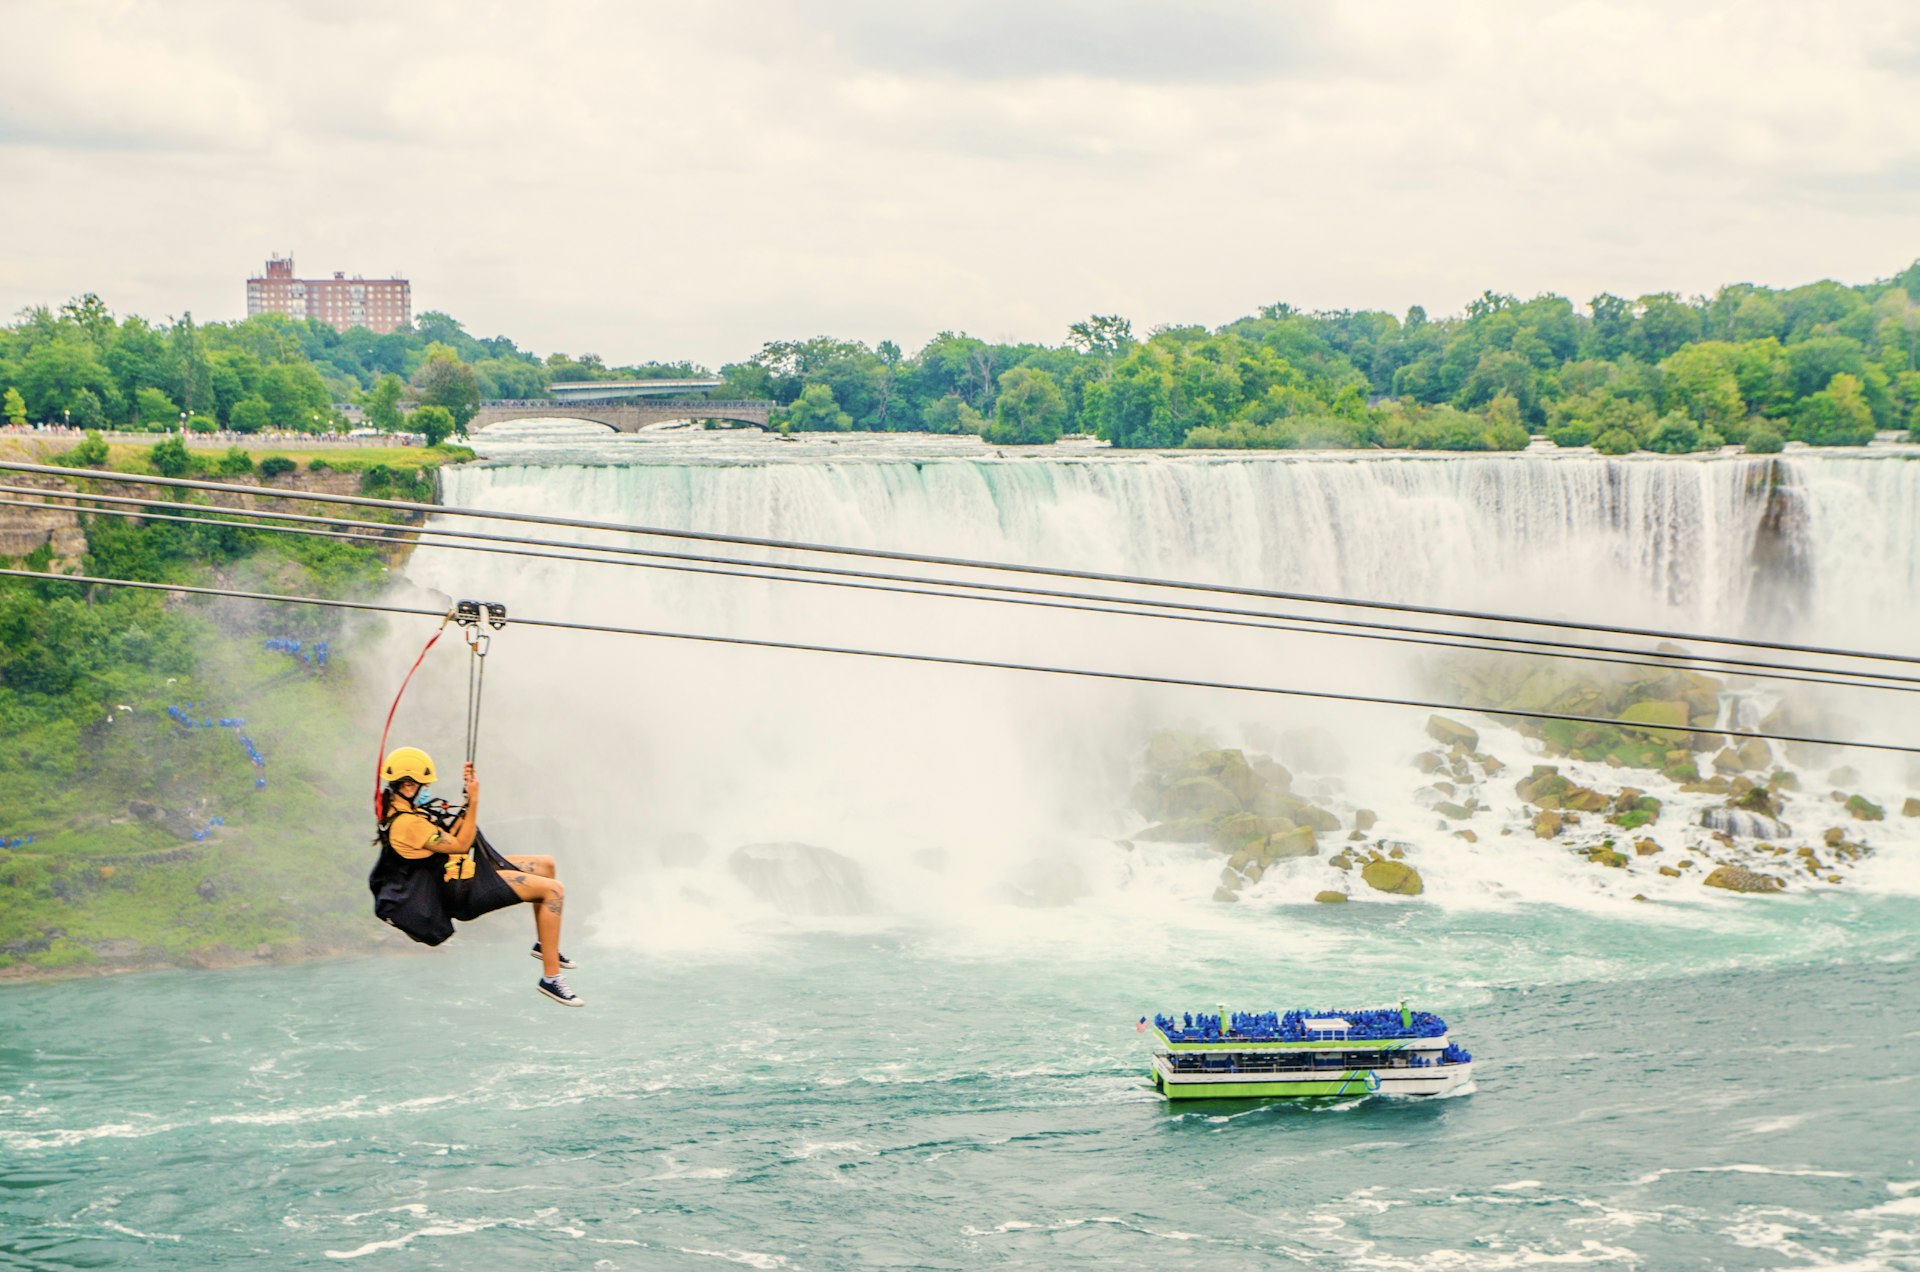 Woman going down zipline in front of Niagara Falls